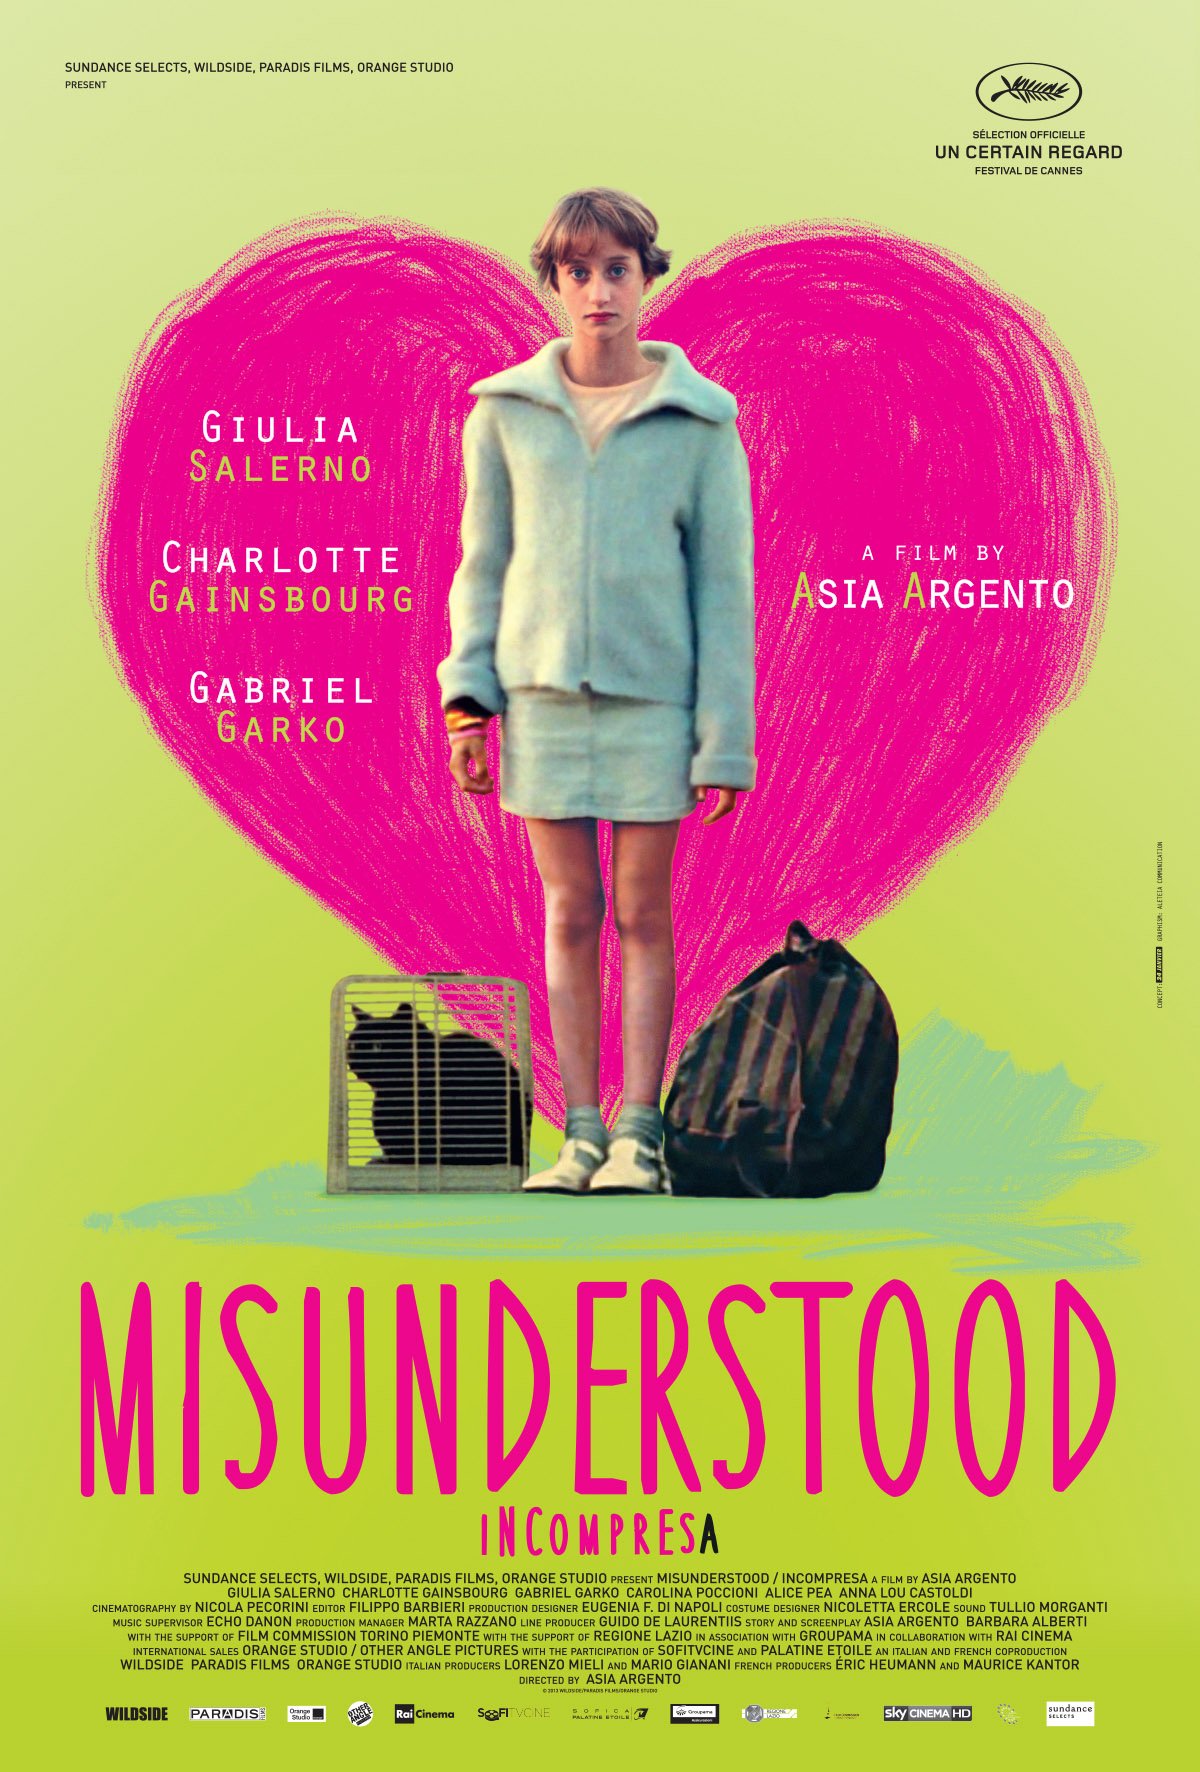 Poster of the movie Misunderstood